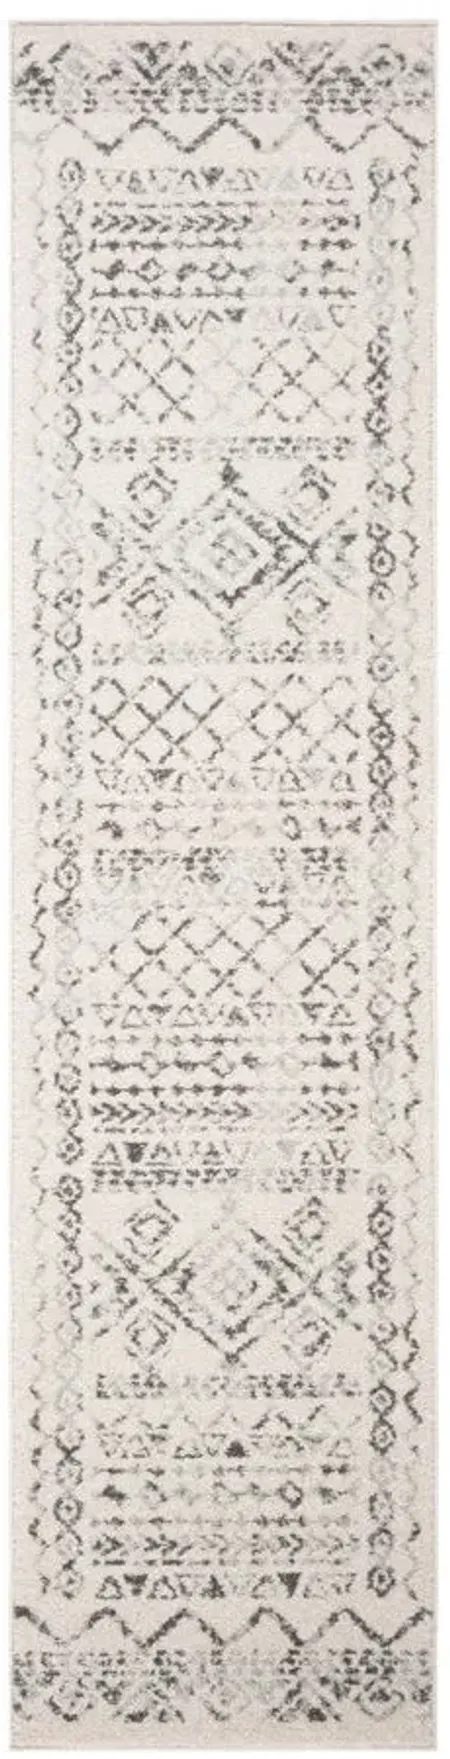 Tulum Runner Rug in Ivory/Gray by Safavieh